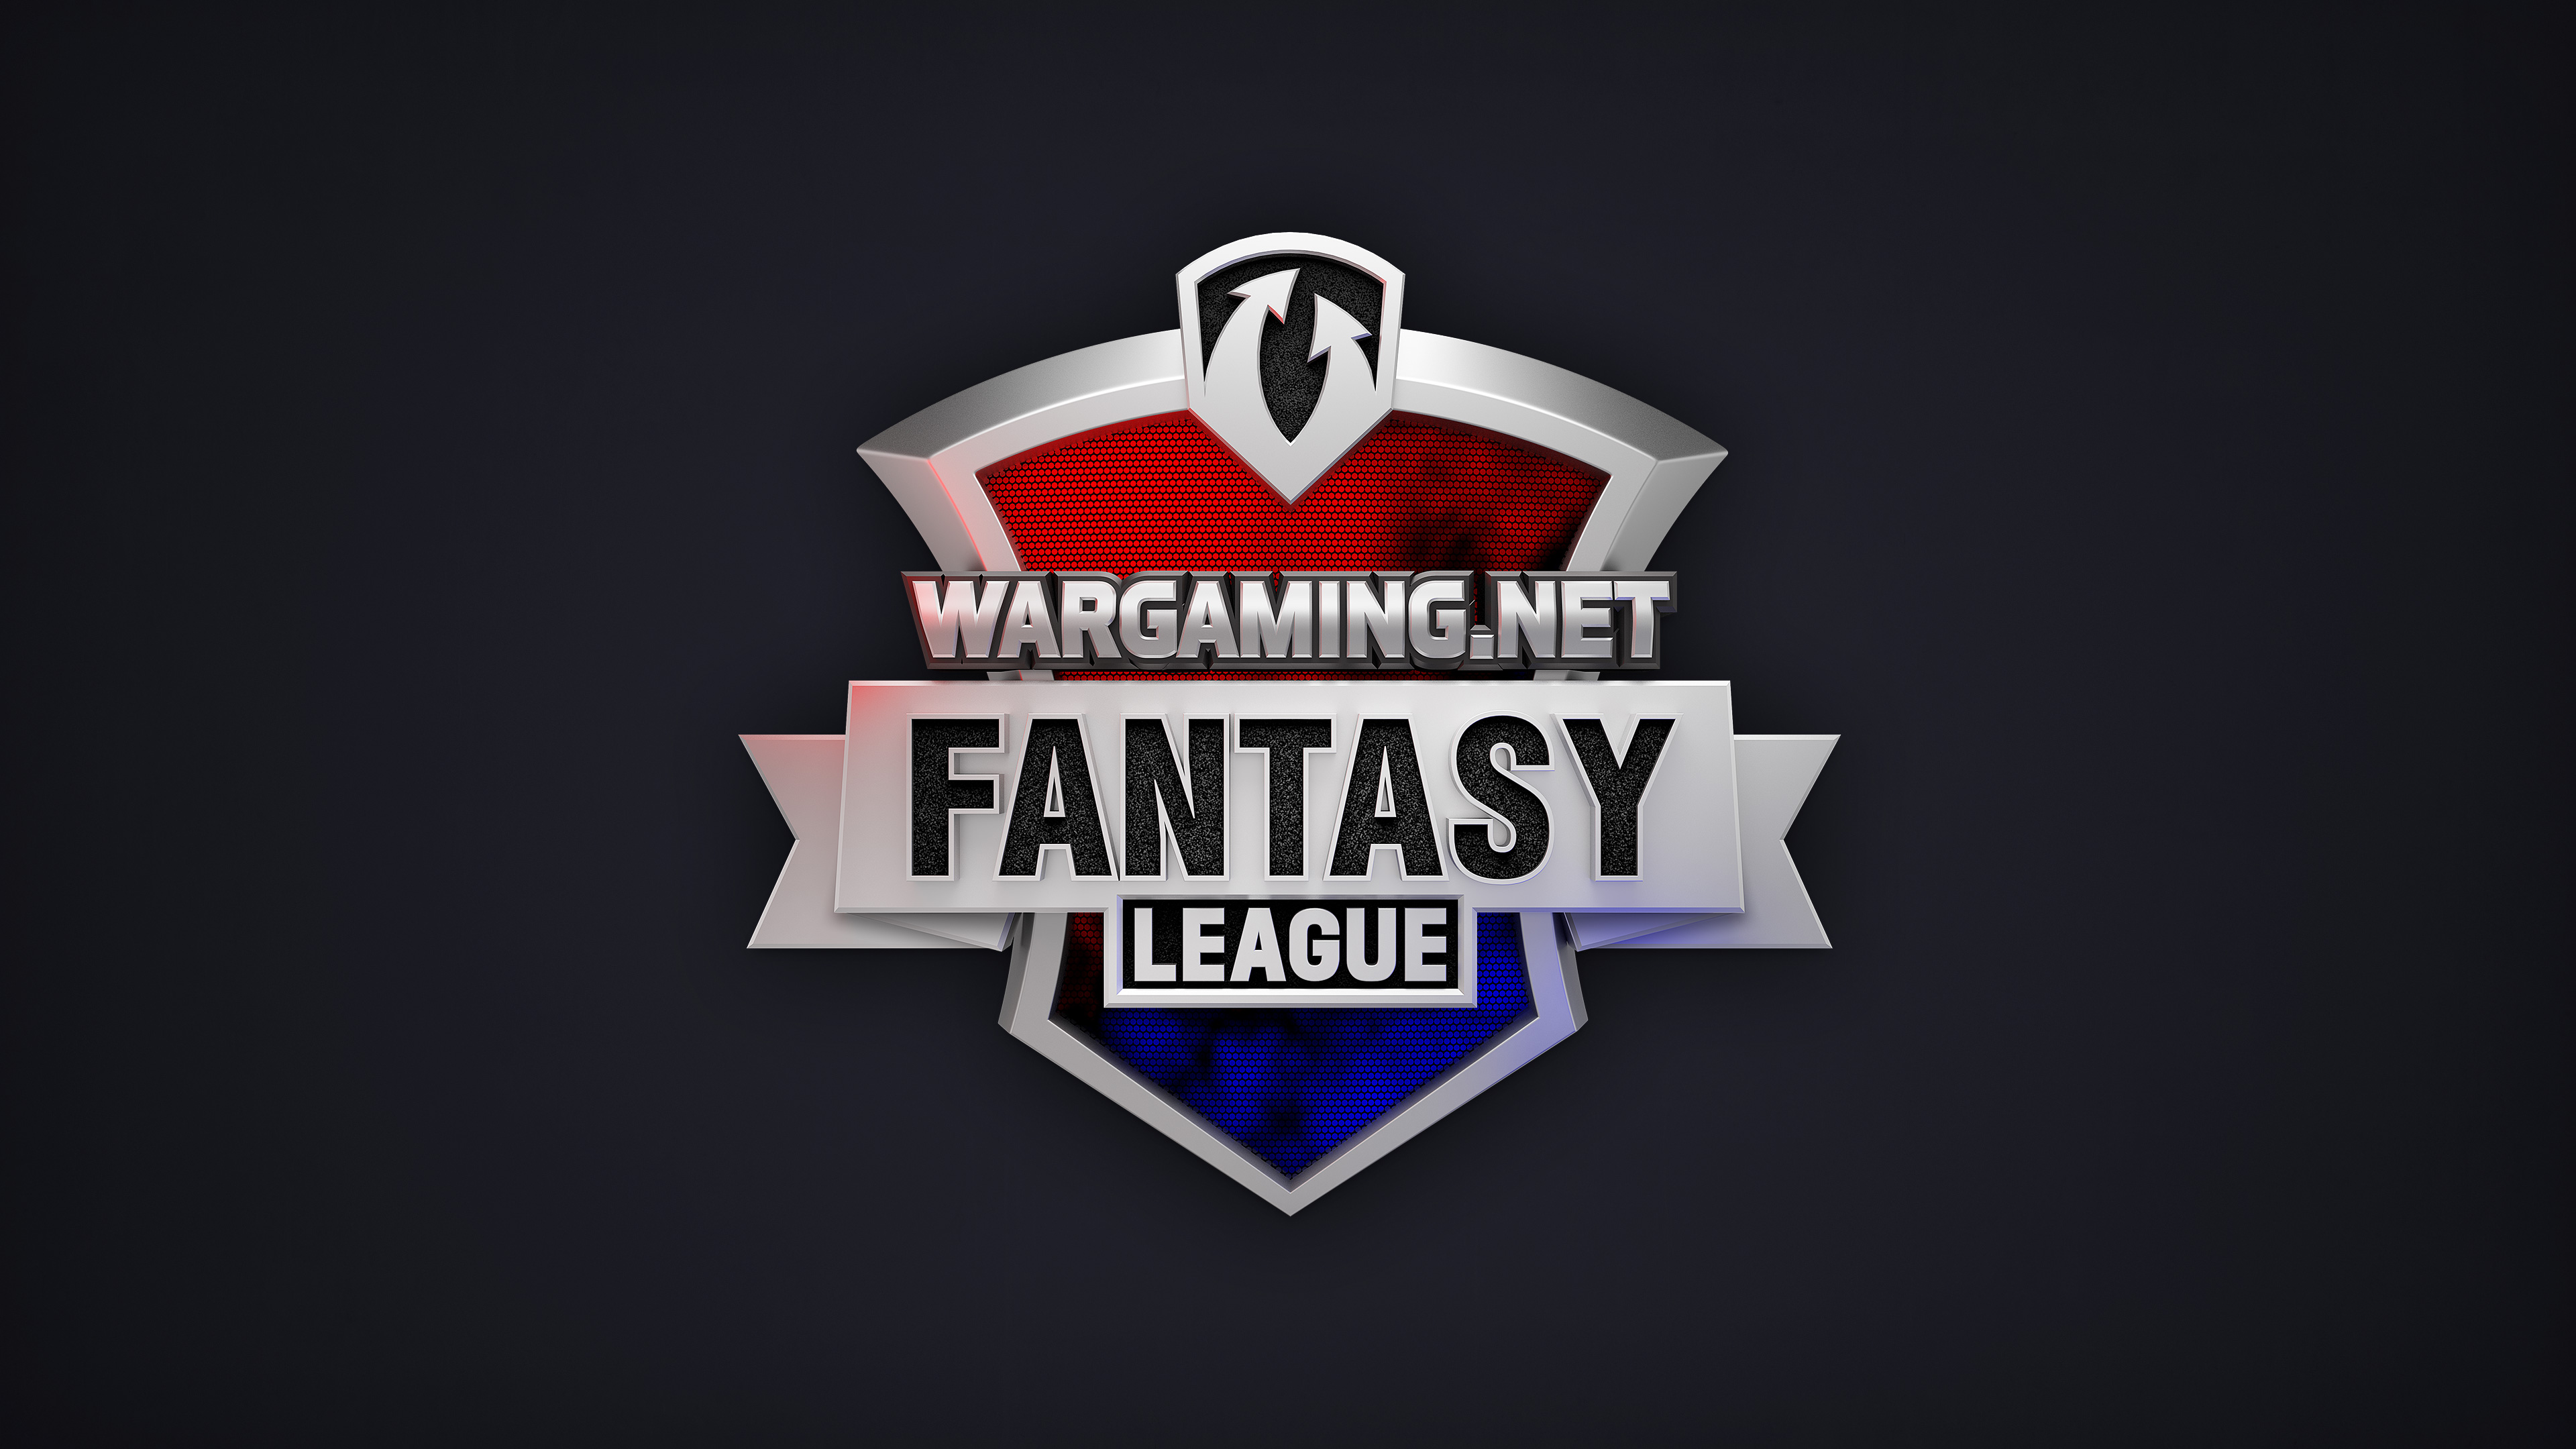 Wargaming.net League – Fantasy League and Finals Logos